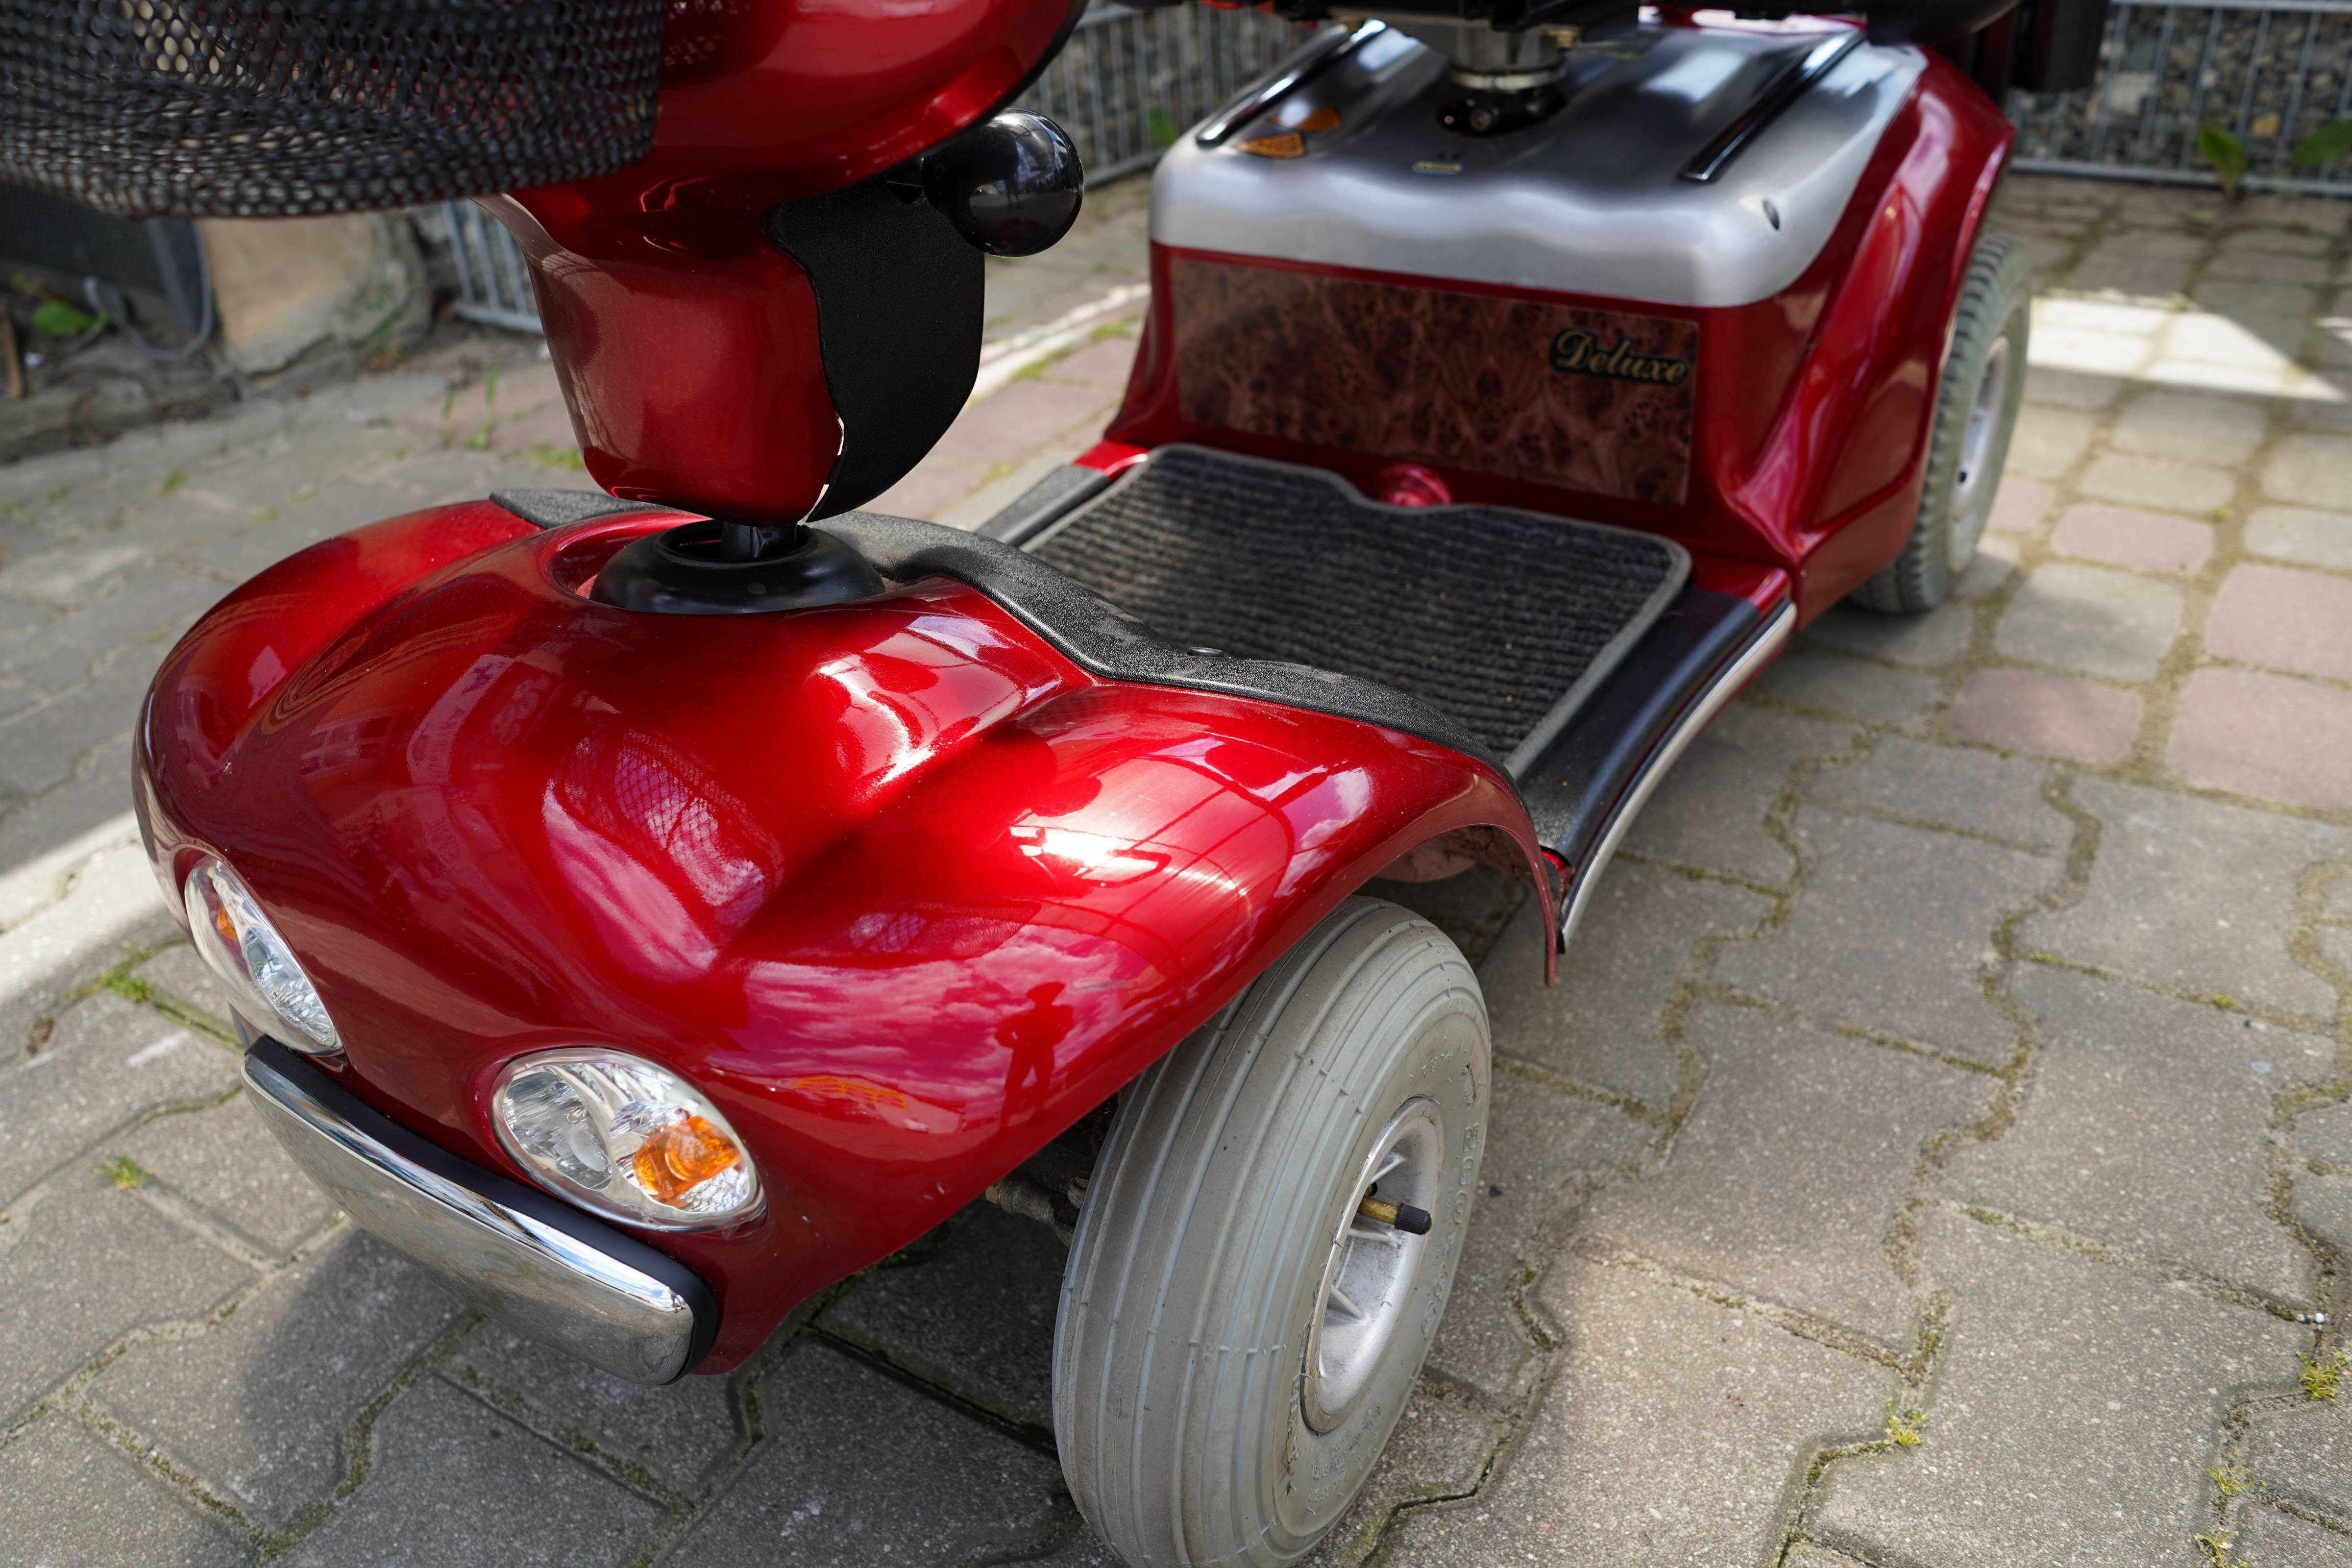 Skuter inwalidzki elektryczny 	Shoprider 888SL wózek